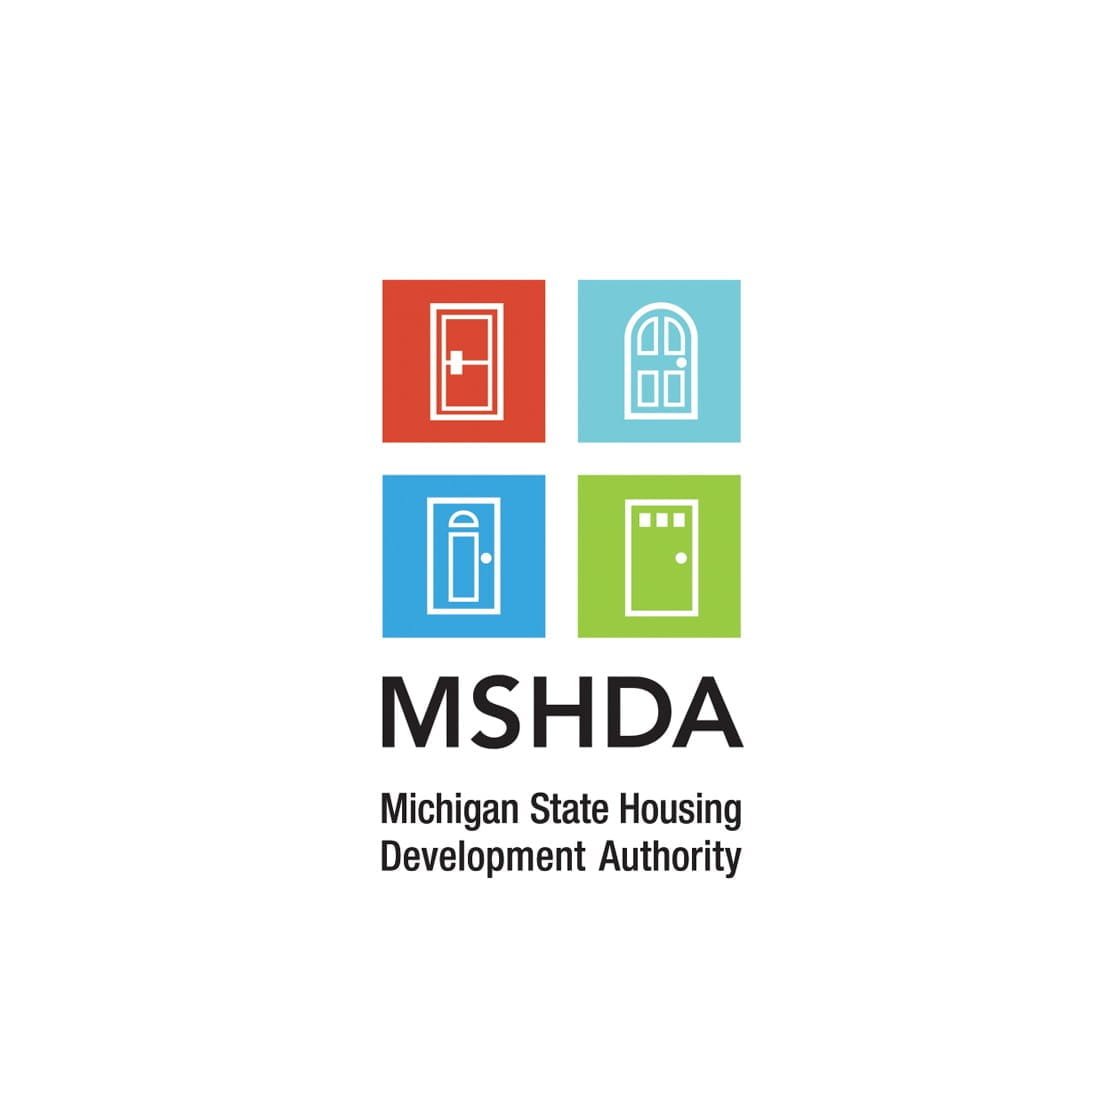 MSHDA Color logo jpg.jpeg